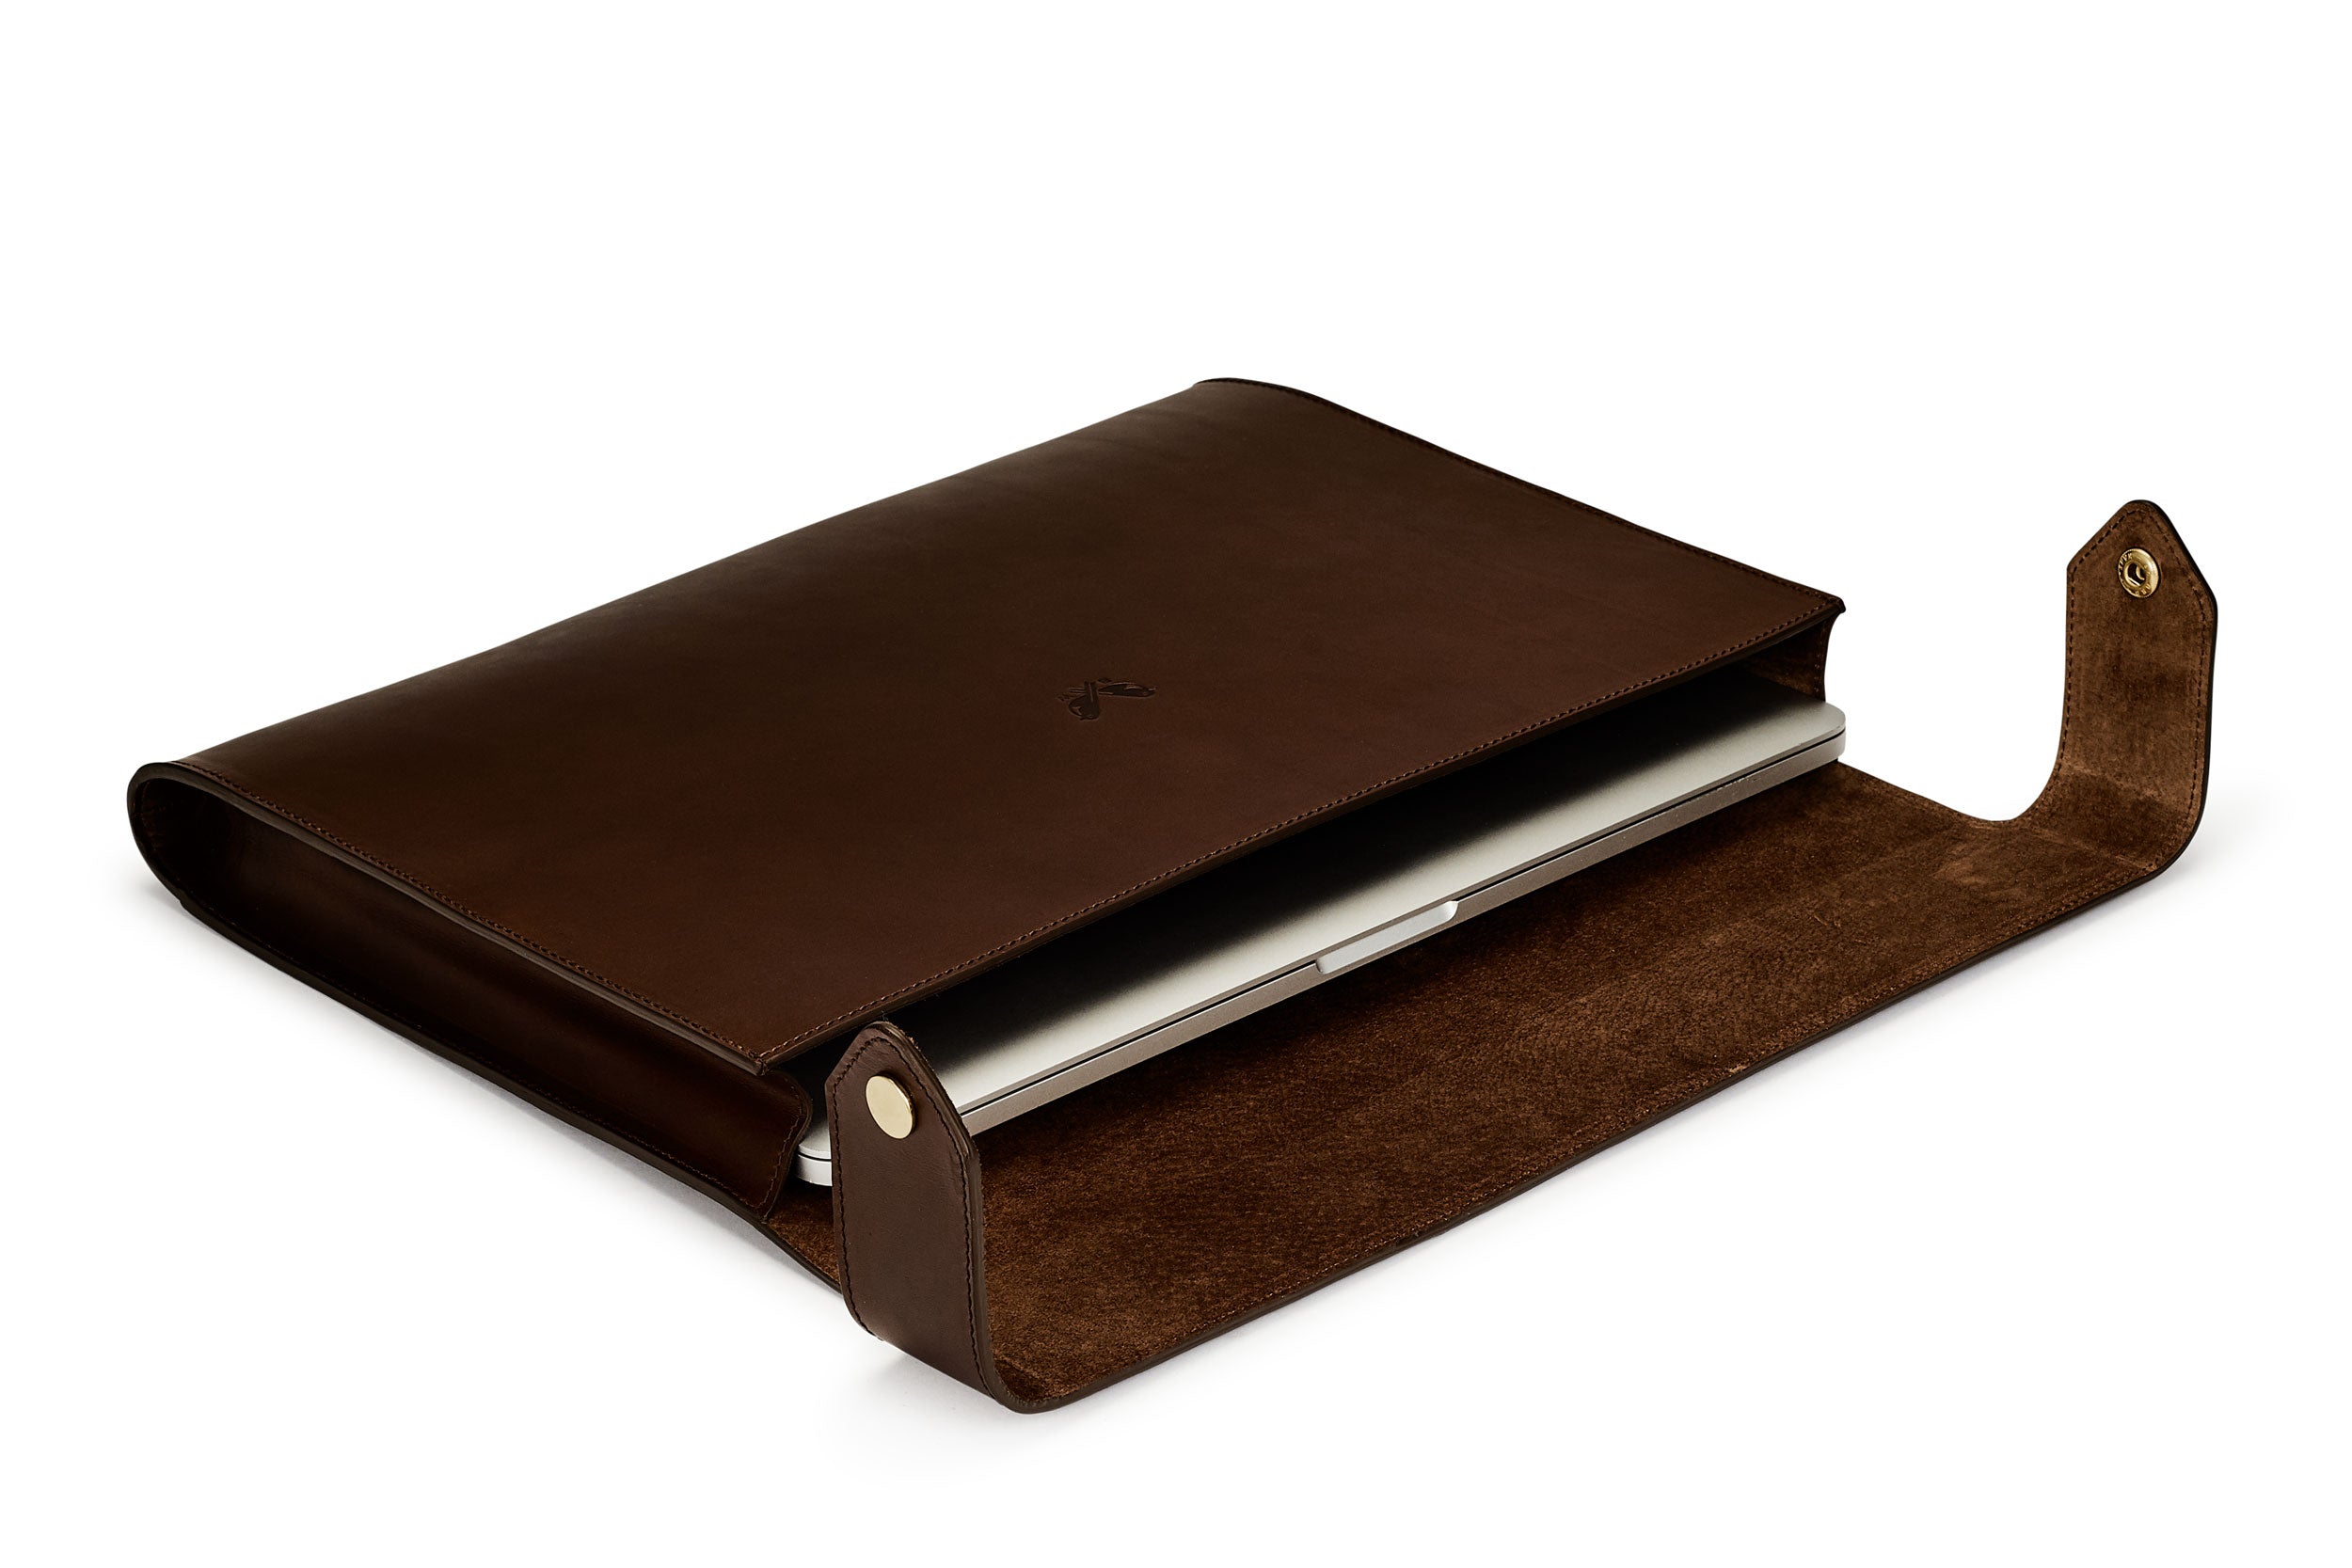 Large Folio - Brown Leather